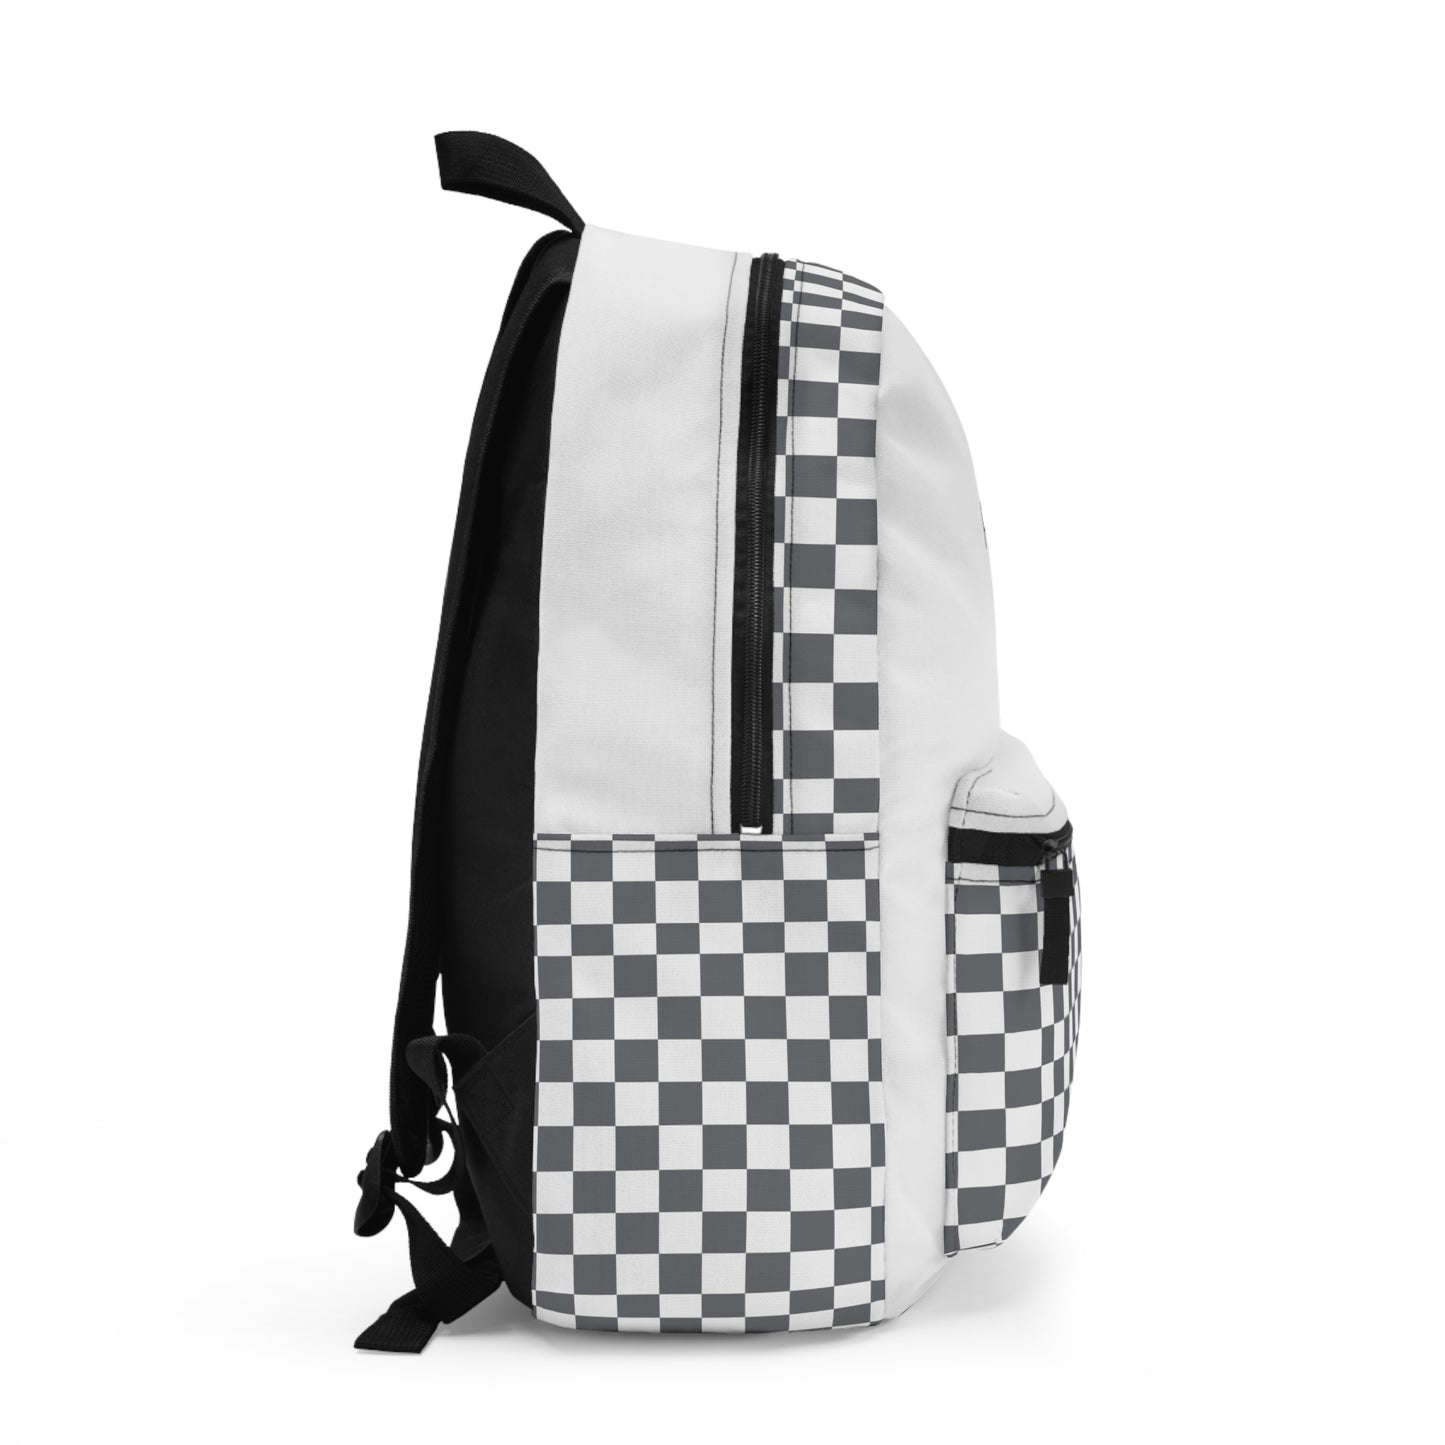 Traveller backpack